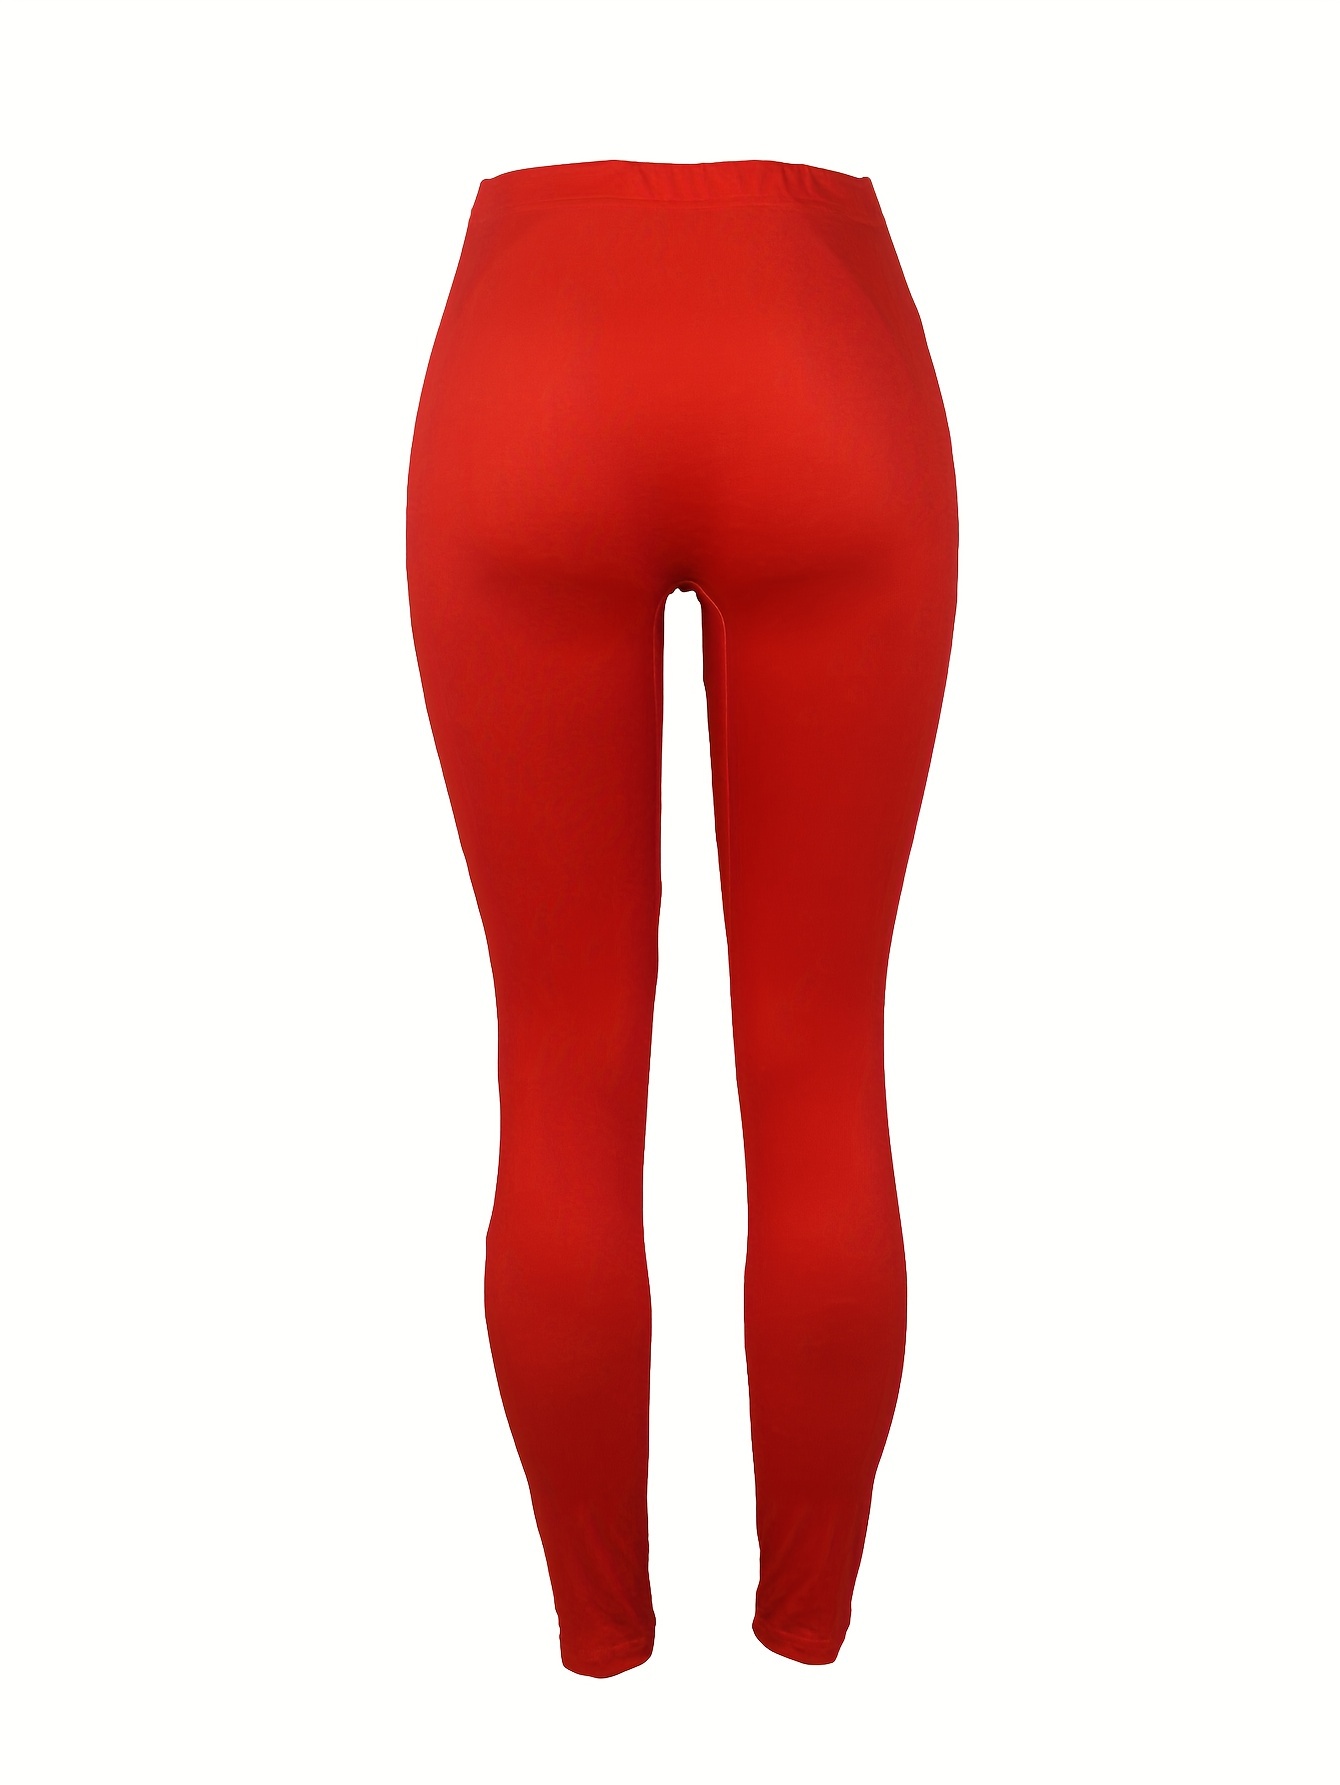  Red Plume Women's Superhero Digital Printing Leggings Yoga  Pants Compressed Tight Trousers (Superhero10, S) : Clothing, Shoes & Jewelry